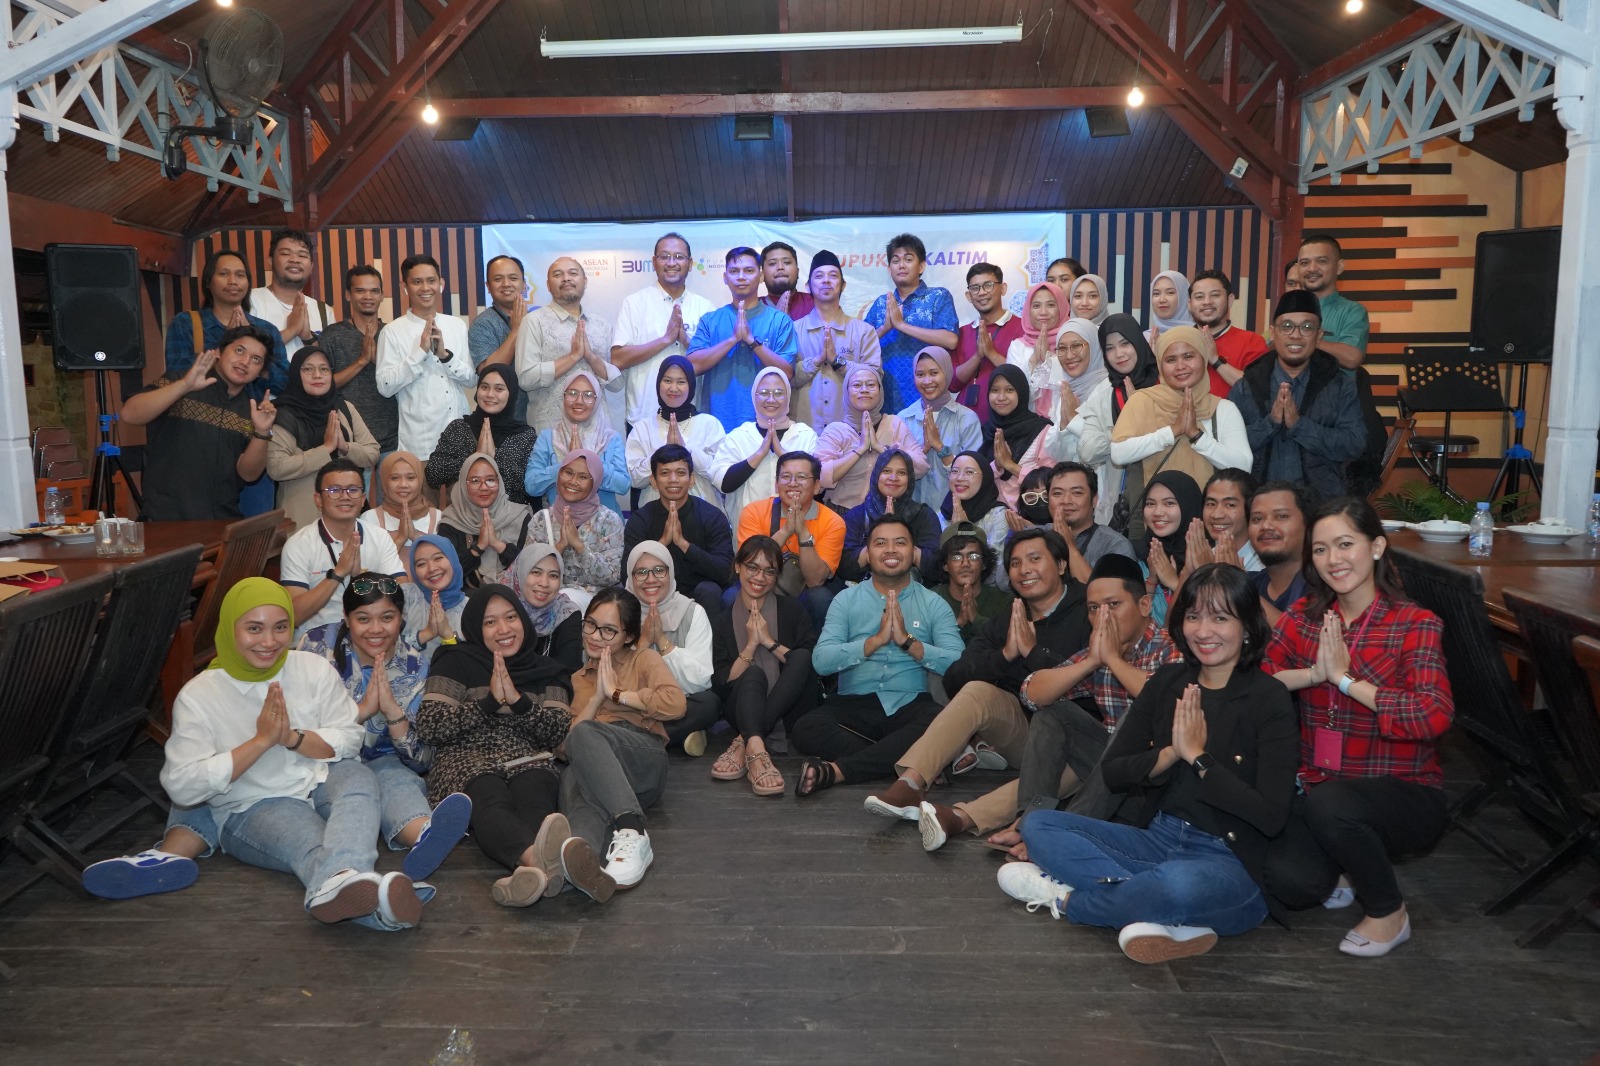 Media Gathering dan Bukber, Jalinan Silaturahmi Pupuk Kaltim Bersama Insan Pers